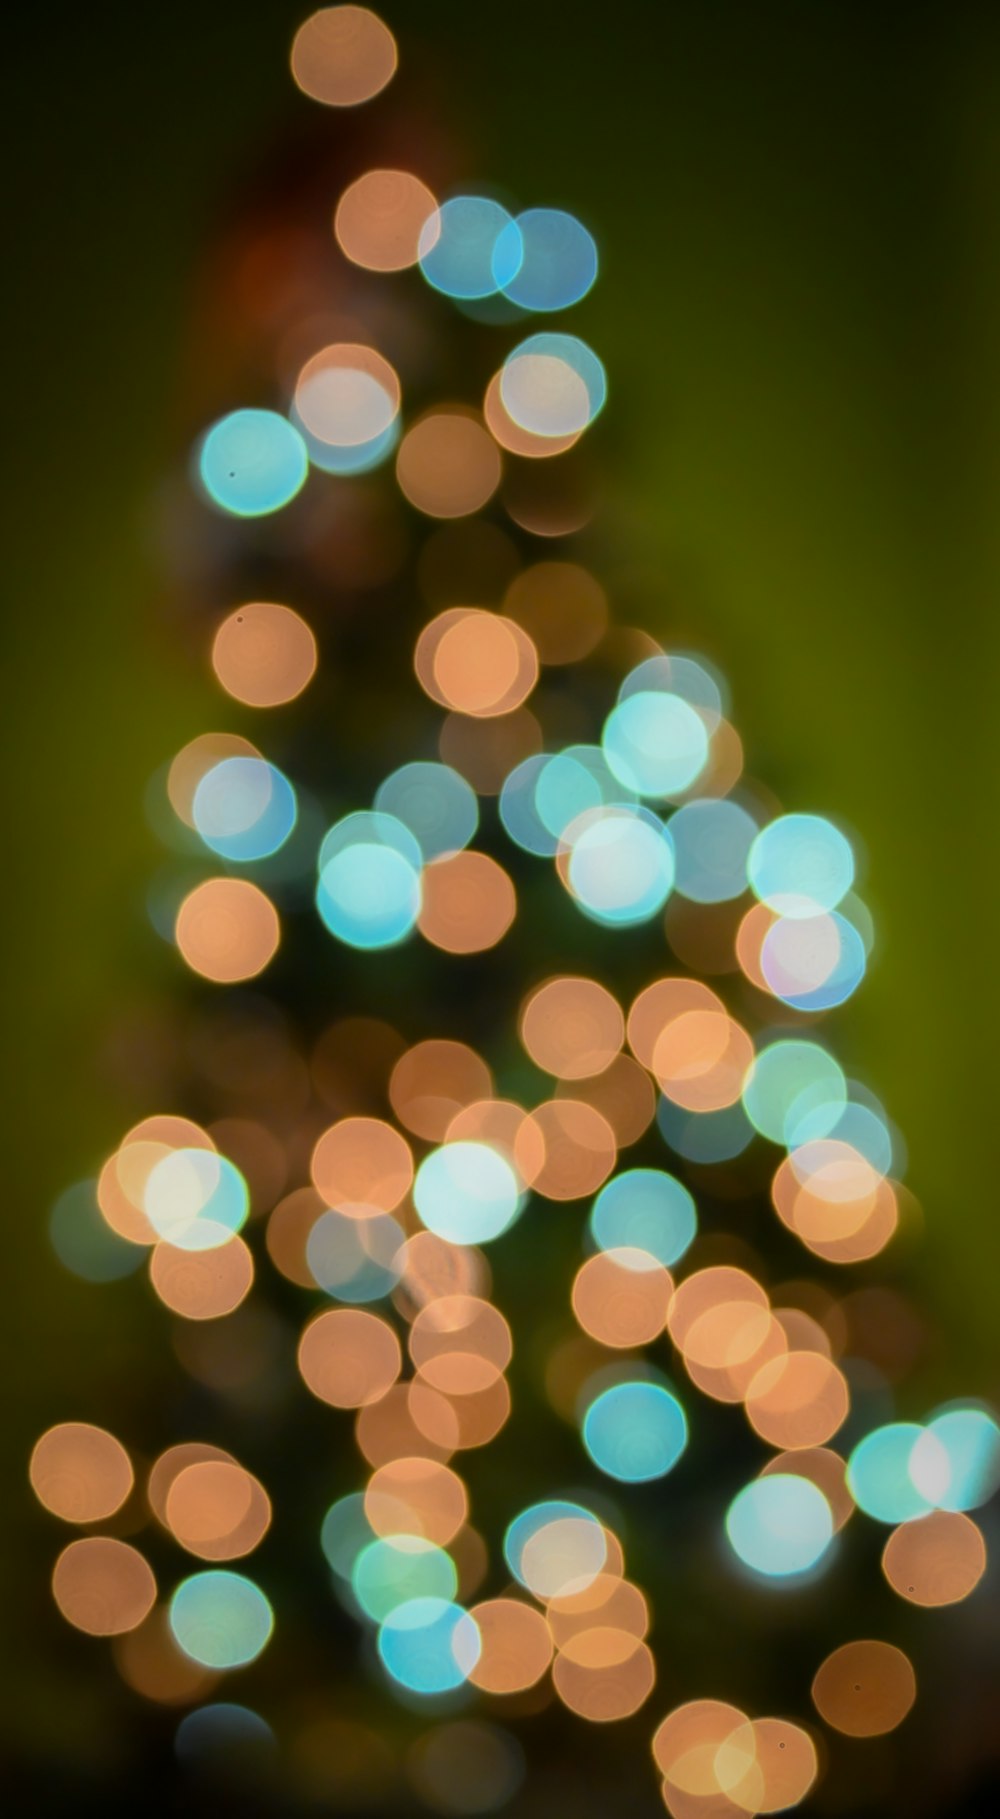 a blurry photo of a lit christmas tree